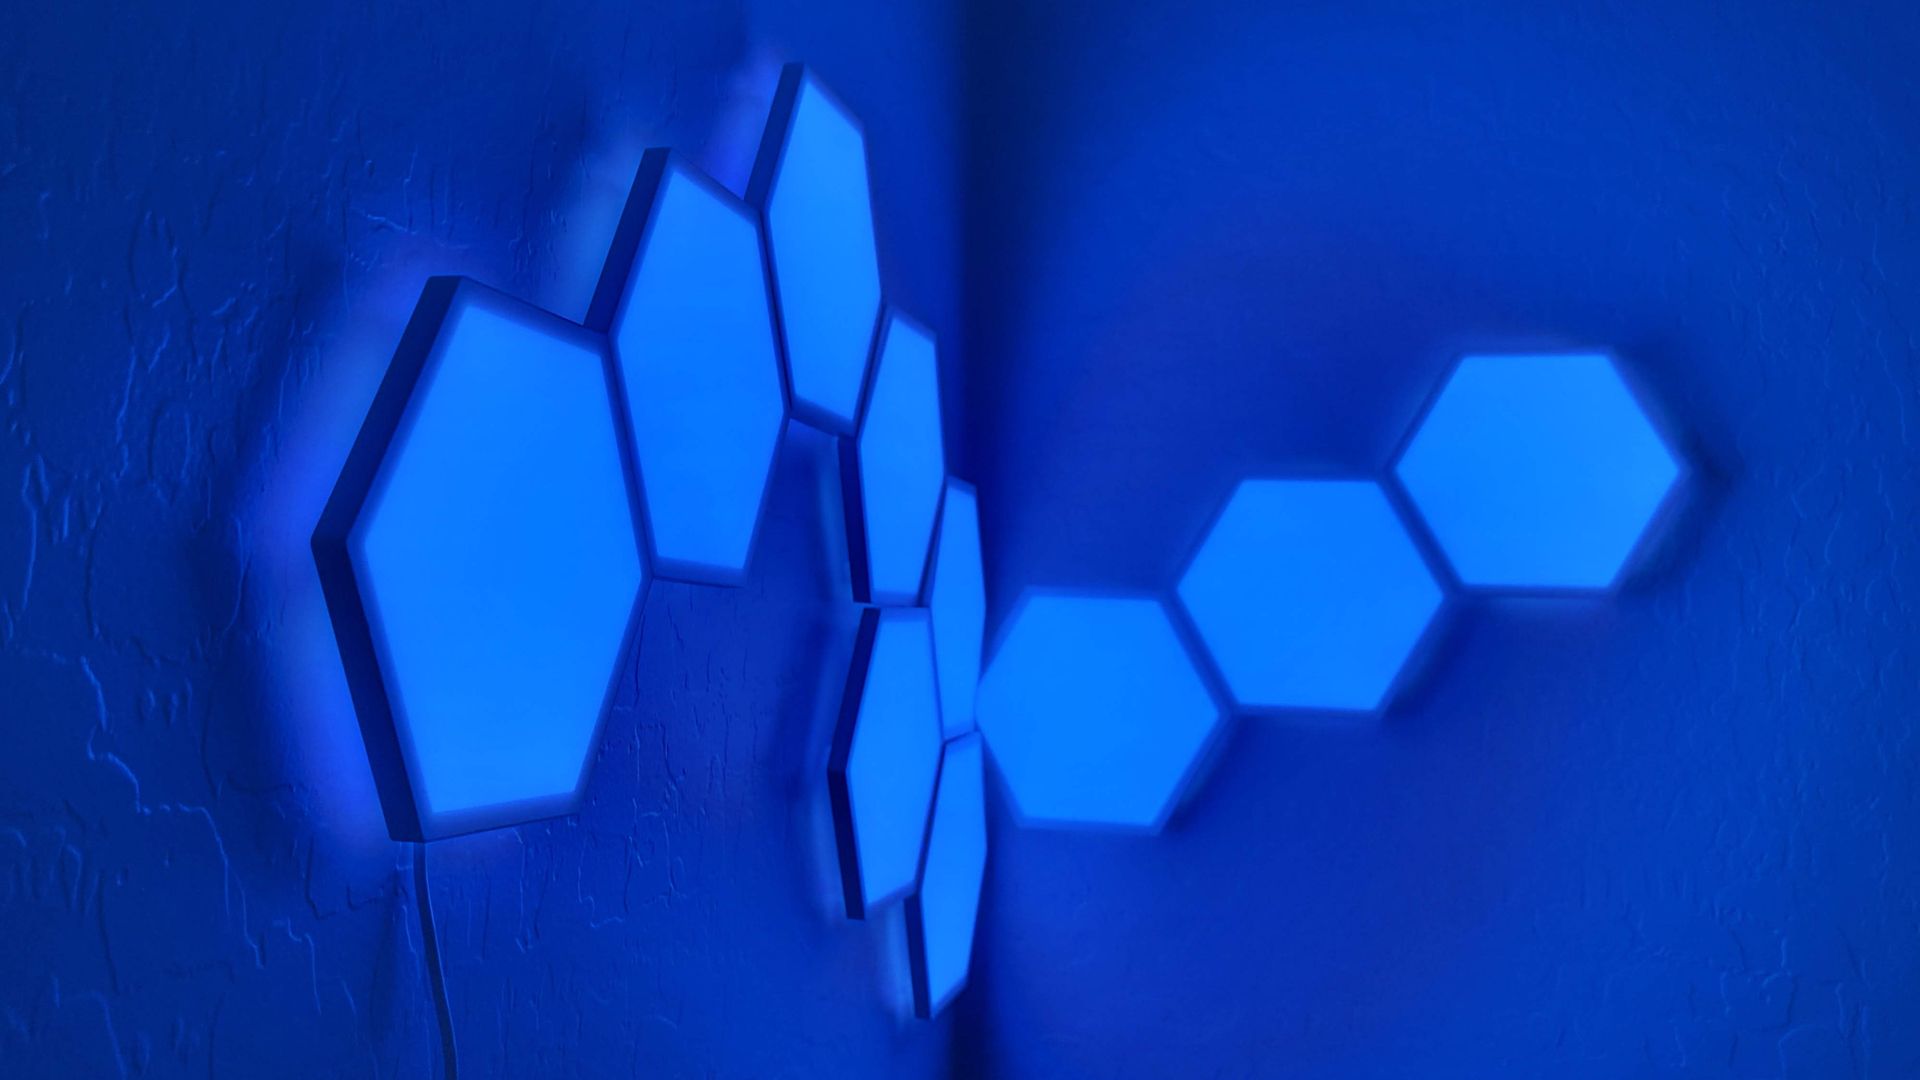 Govee Hexa panels glowing blue